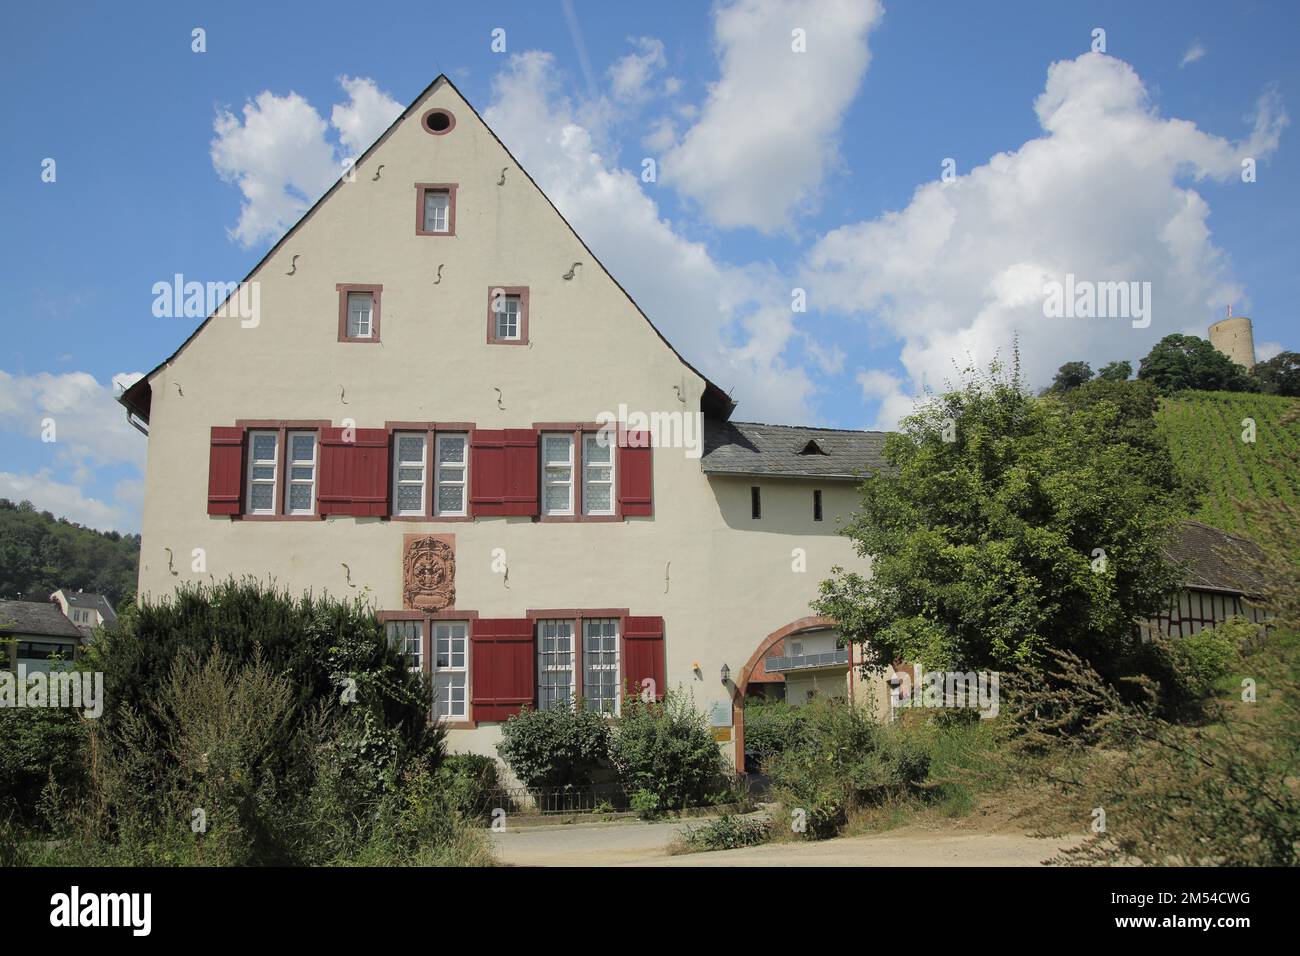 Bassenheimer Hof e il Castello di Scharfenstein, Ruin, Kiedrich, Rheingau, Taunus, Assia, Germania Foto Stock